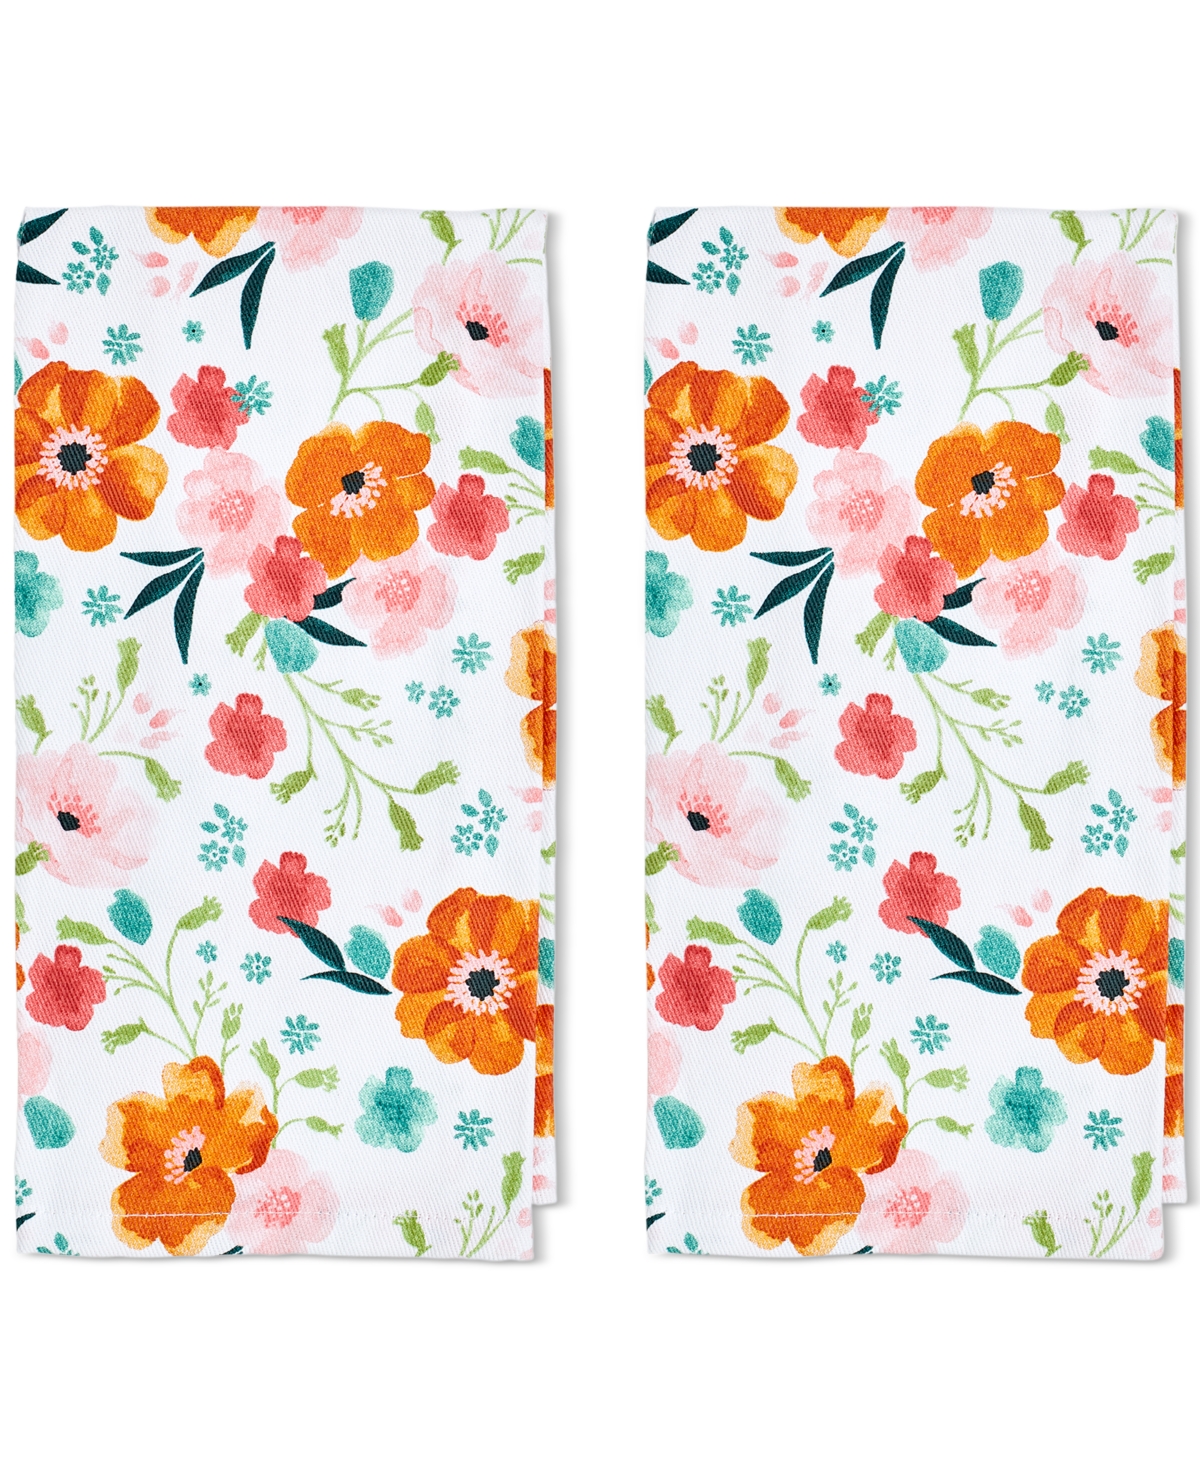 Floral Kitchen Towels, Set of 2 - Multi